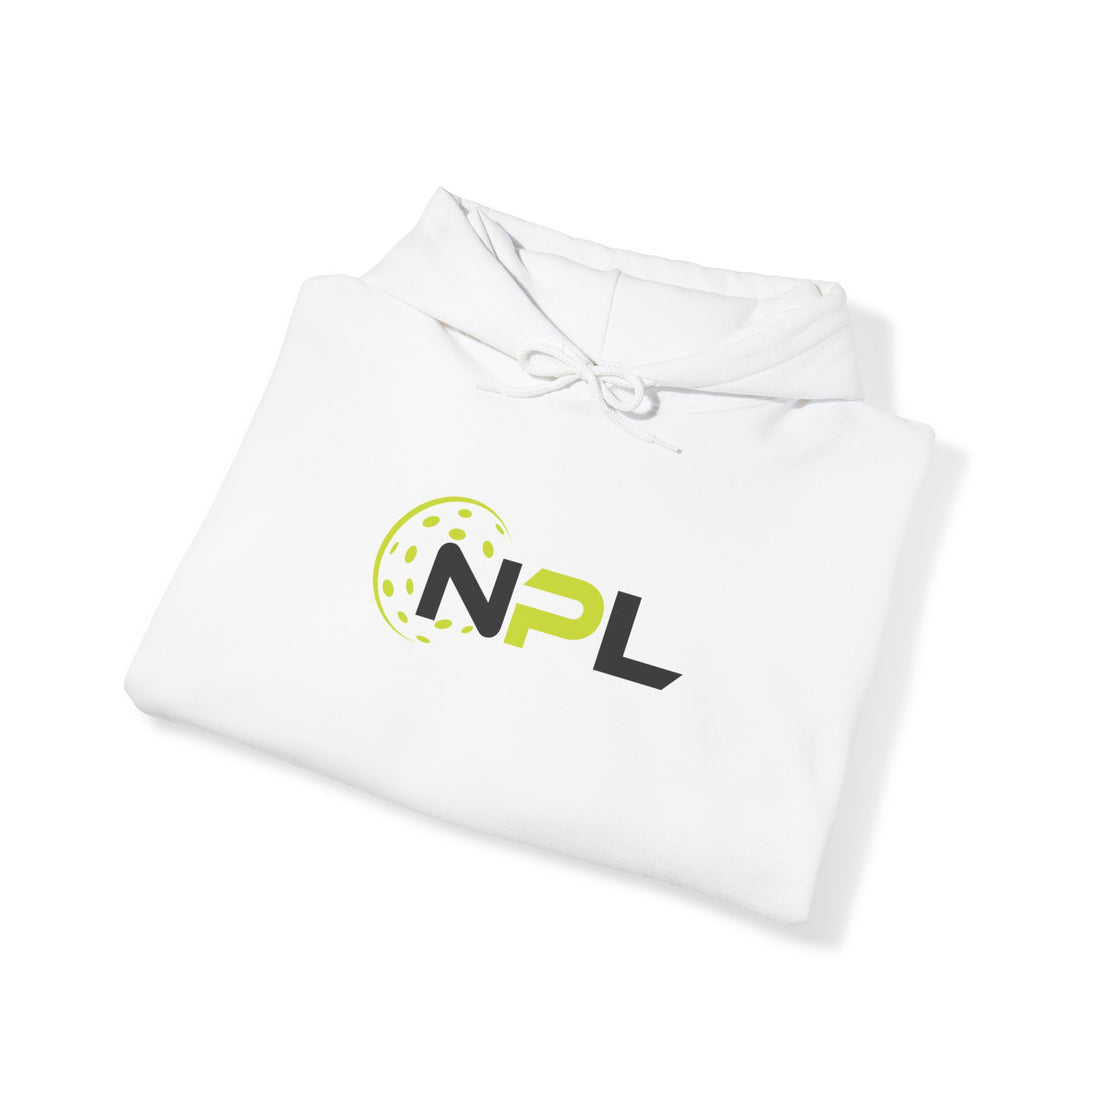 NPL™ Unisex Hooded Sweatshirt